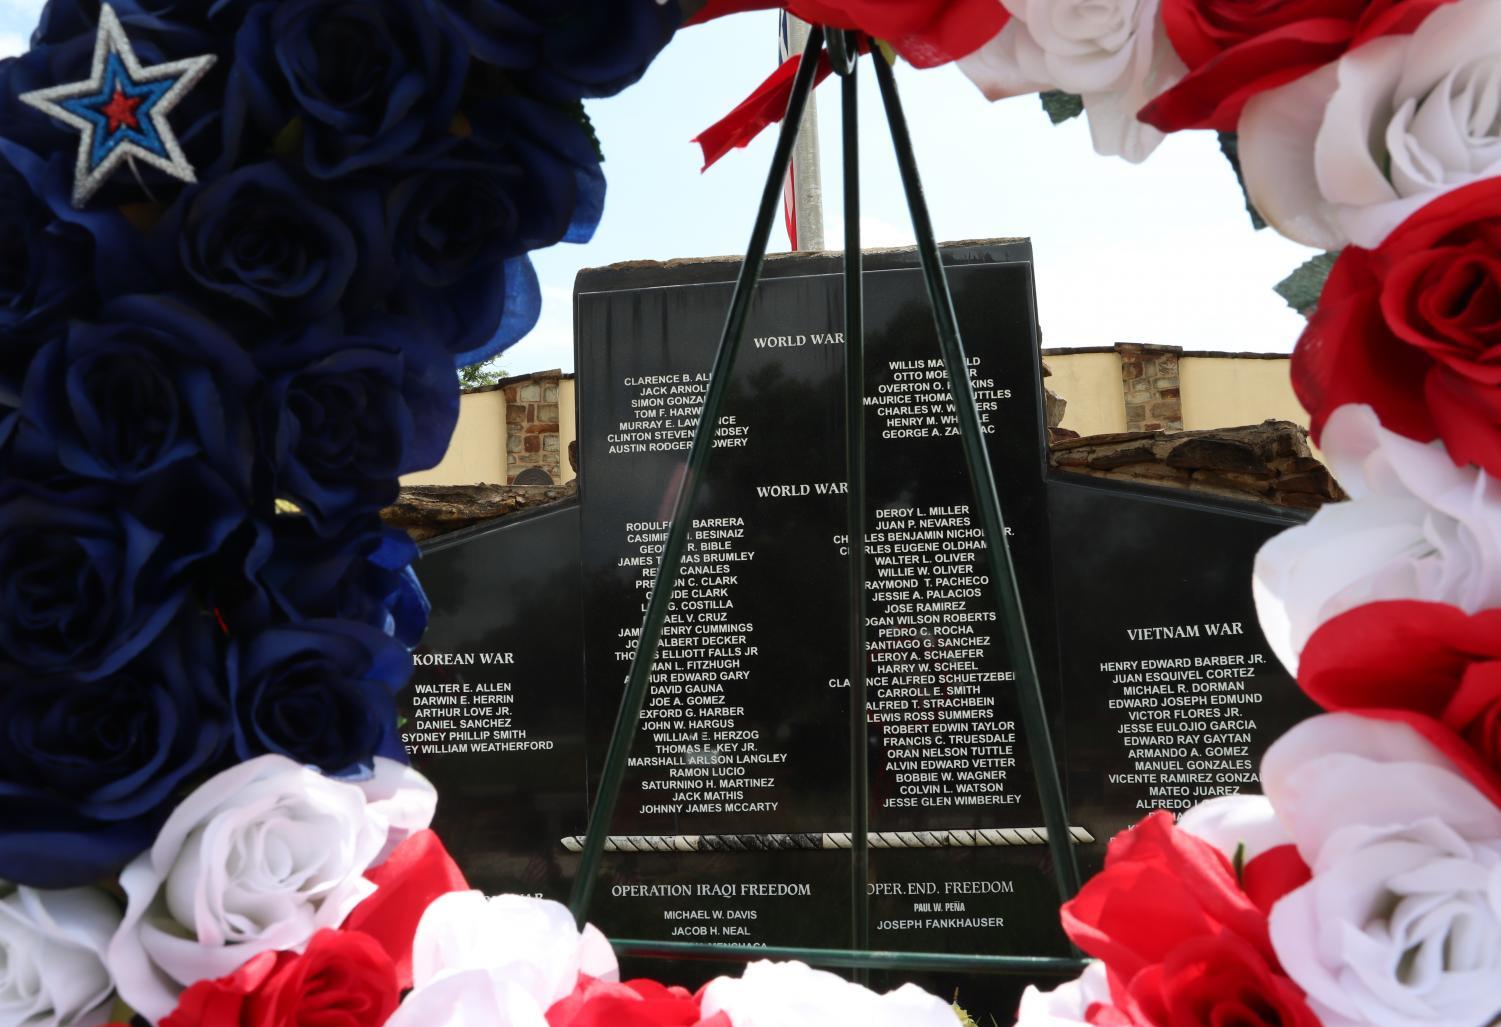 %28Photo+Gallery%29+Hays+County+honors+fallen+soldiers+at+Veterans+Memorial